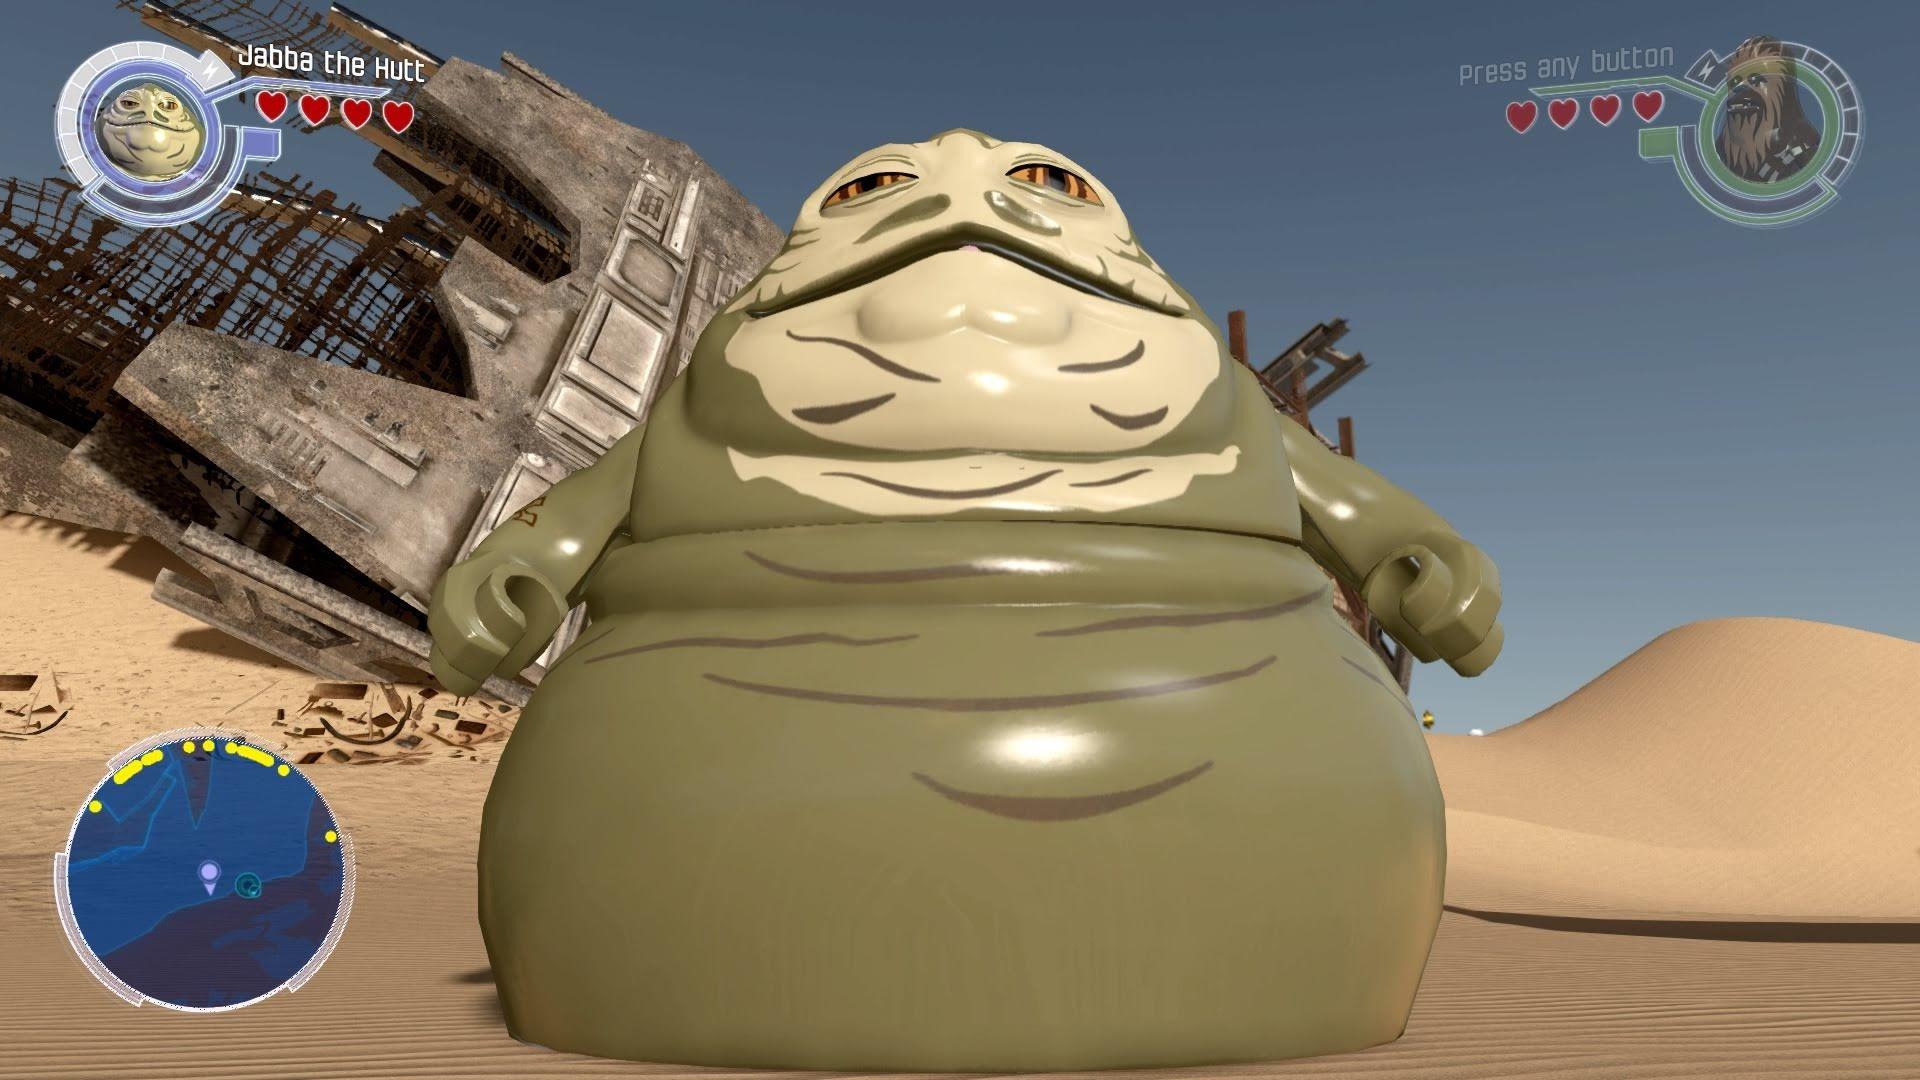 Jabba the Hutt Free Roam LEGO Star Wars The Force Awakens